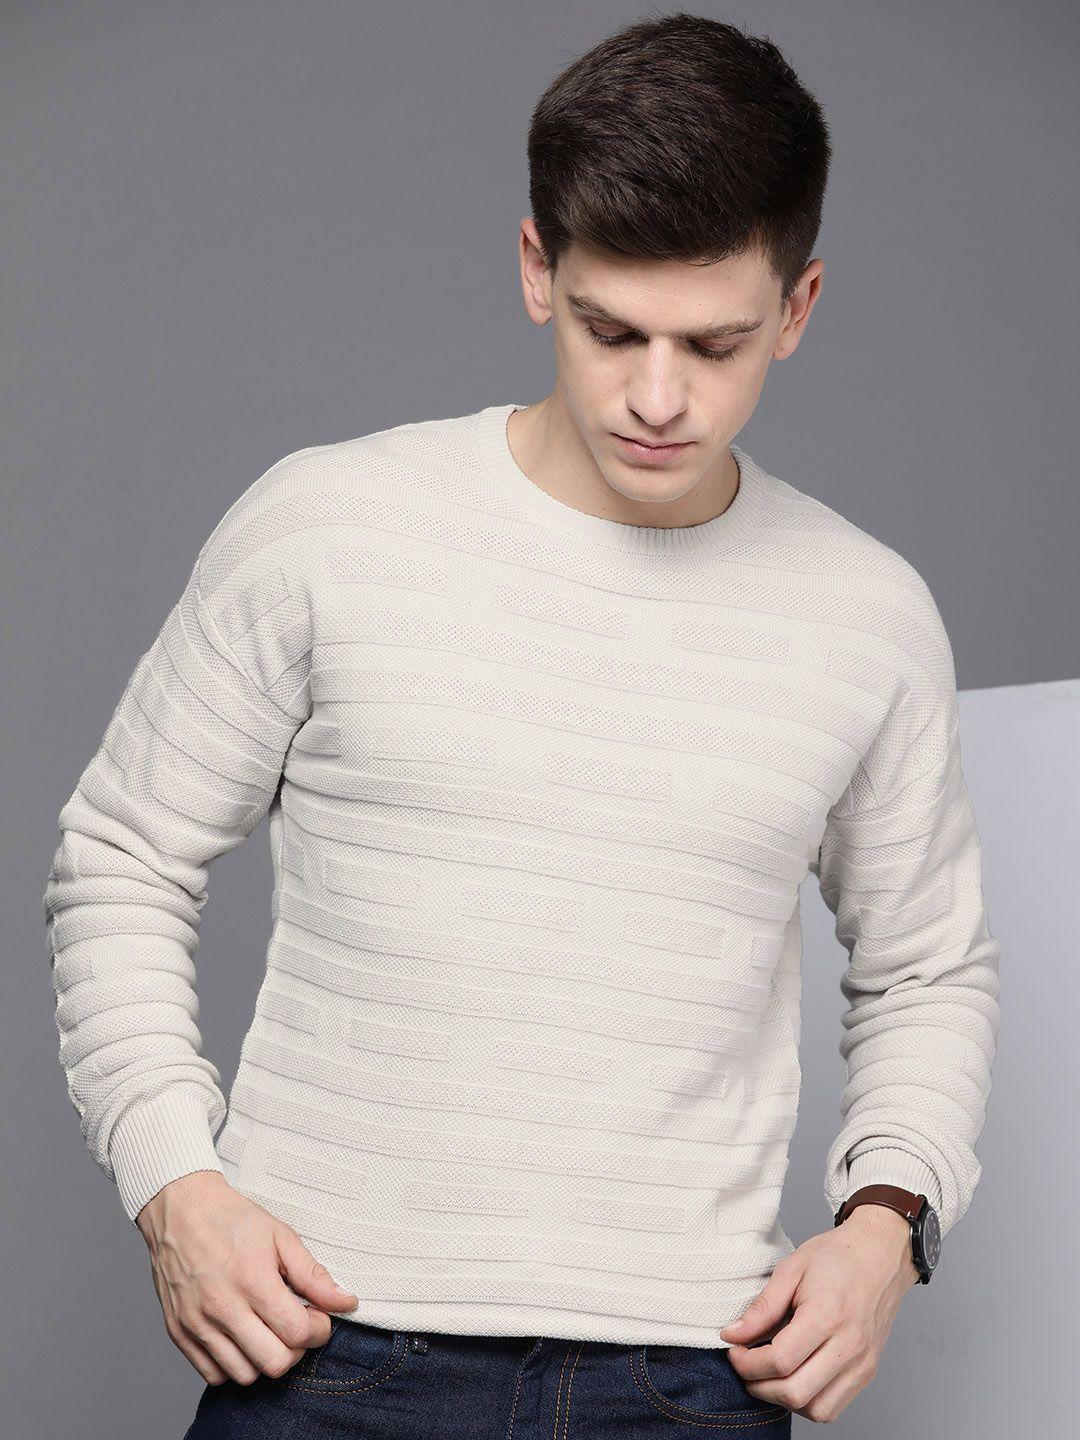 kenneth-cole-men-off-white-self-design-open-knit-pure-cotton-pullover-sweater